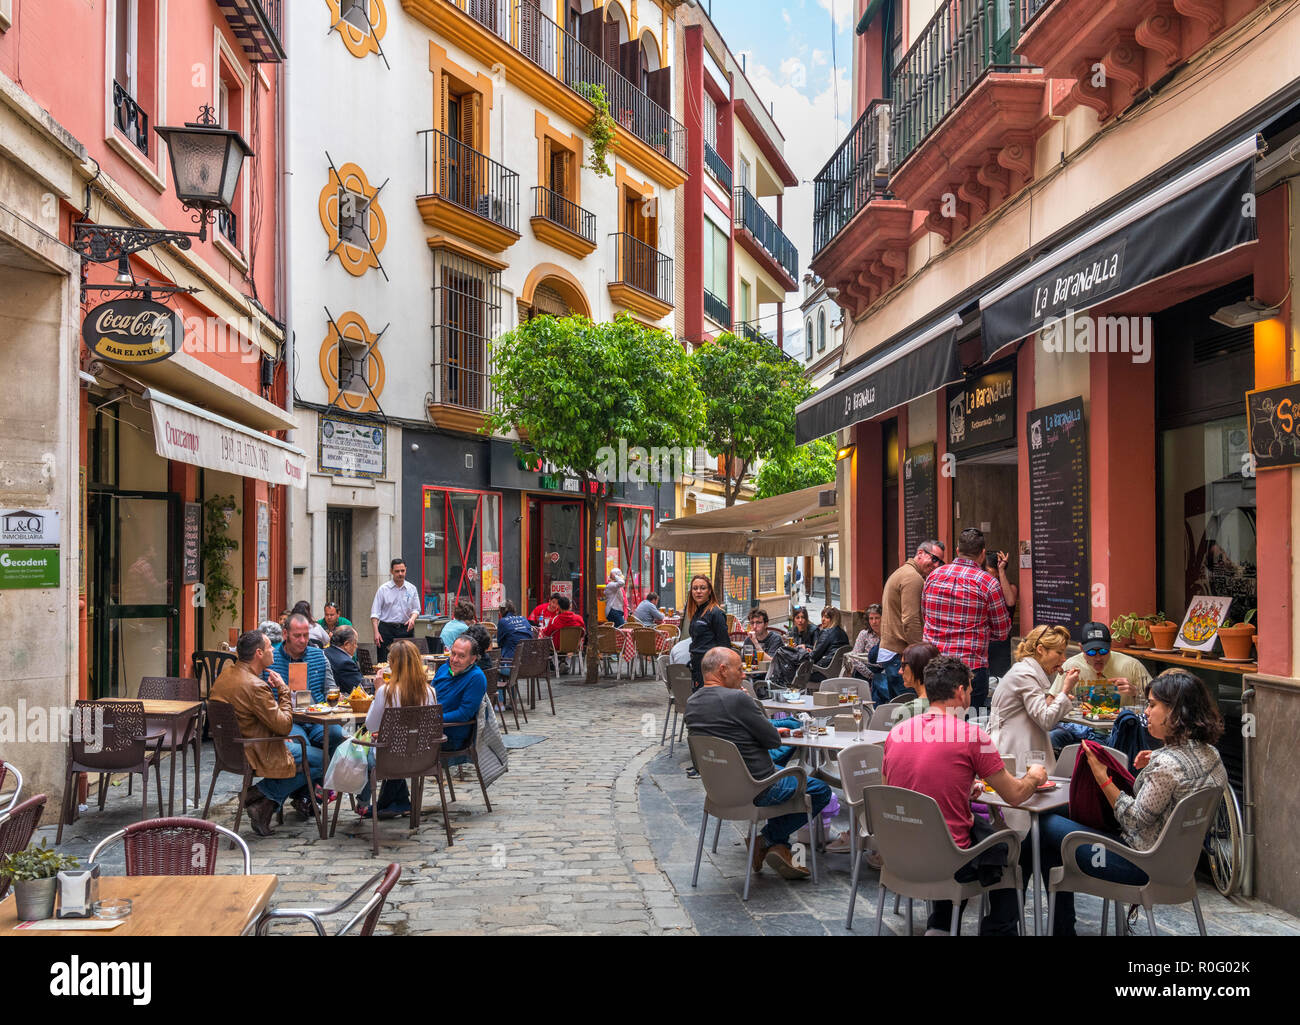 Cafes and restaurants on Calle Joaquín Guichot near the Plaza Nueva, Seville, Andalucia, Spain Stock Photo